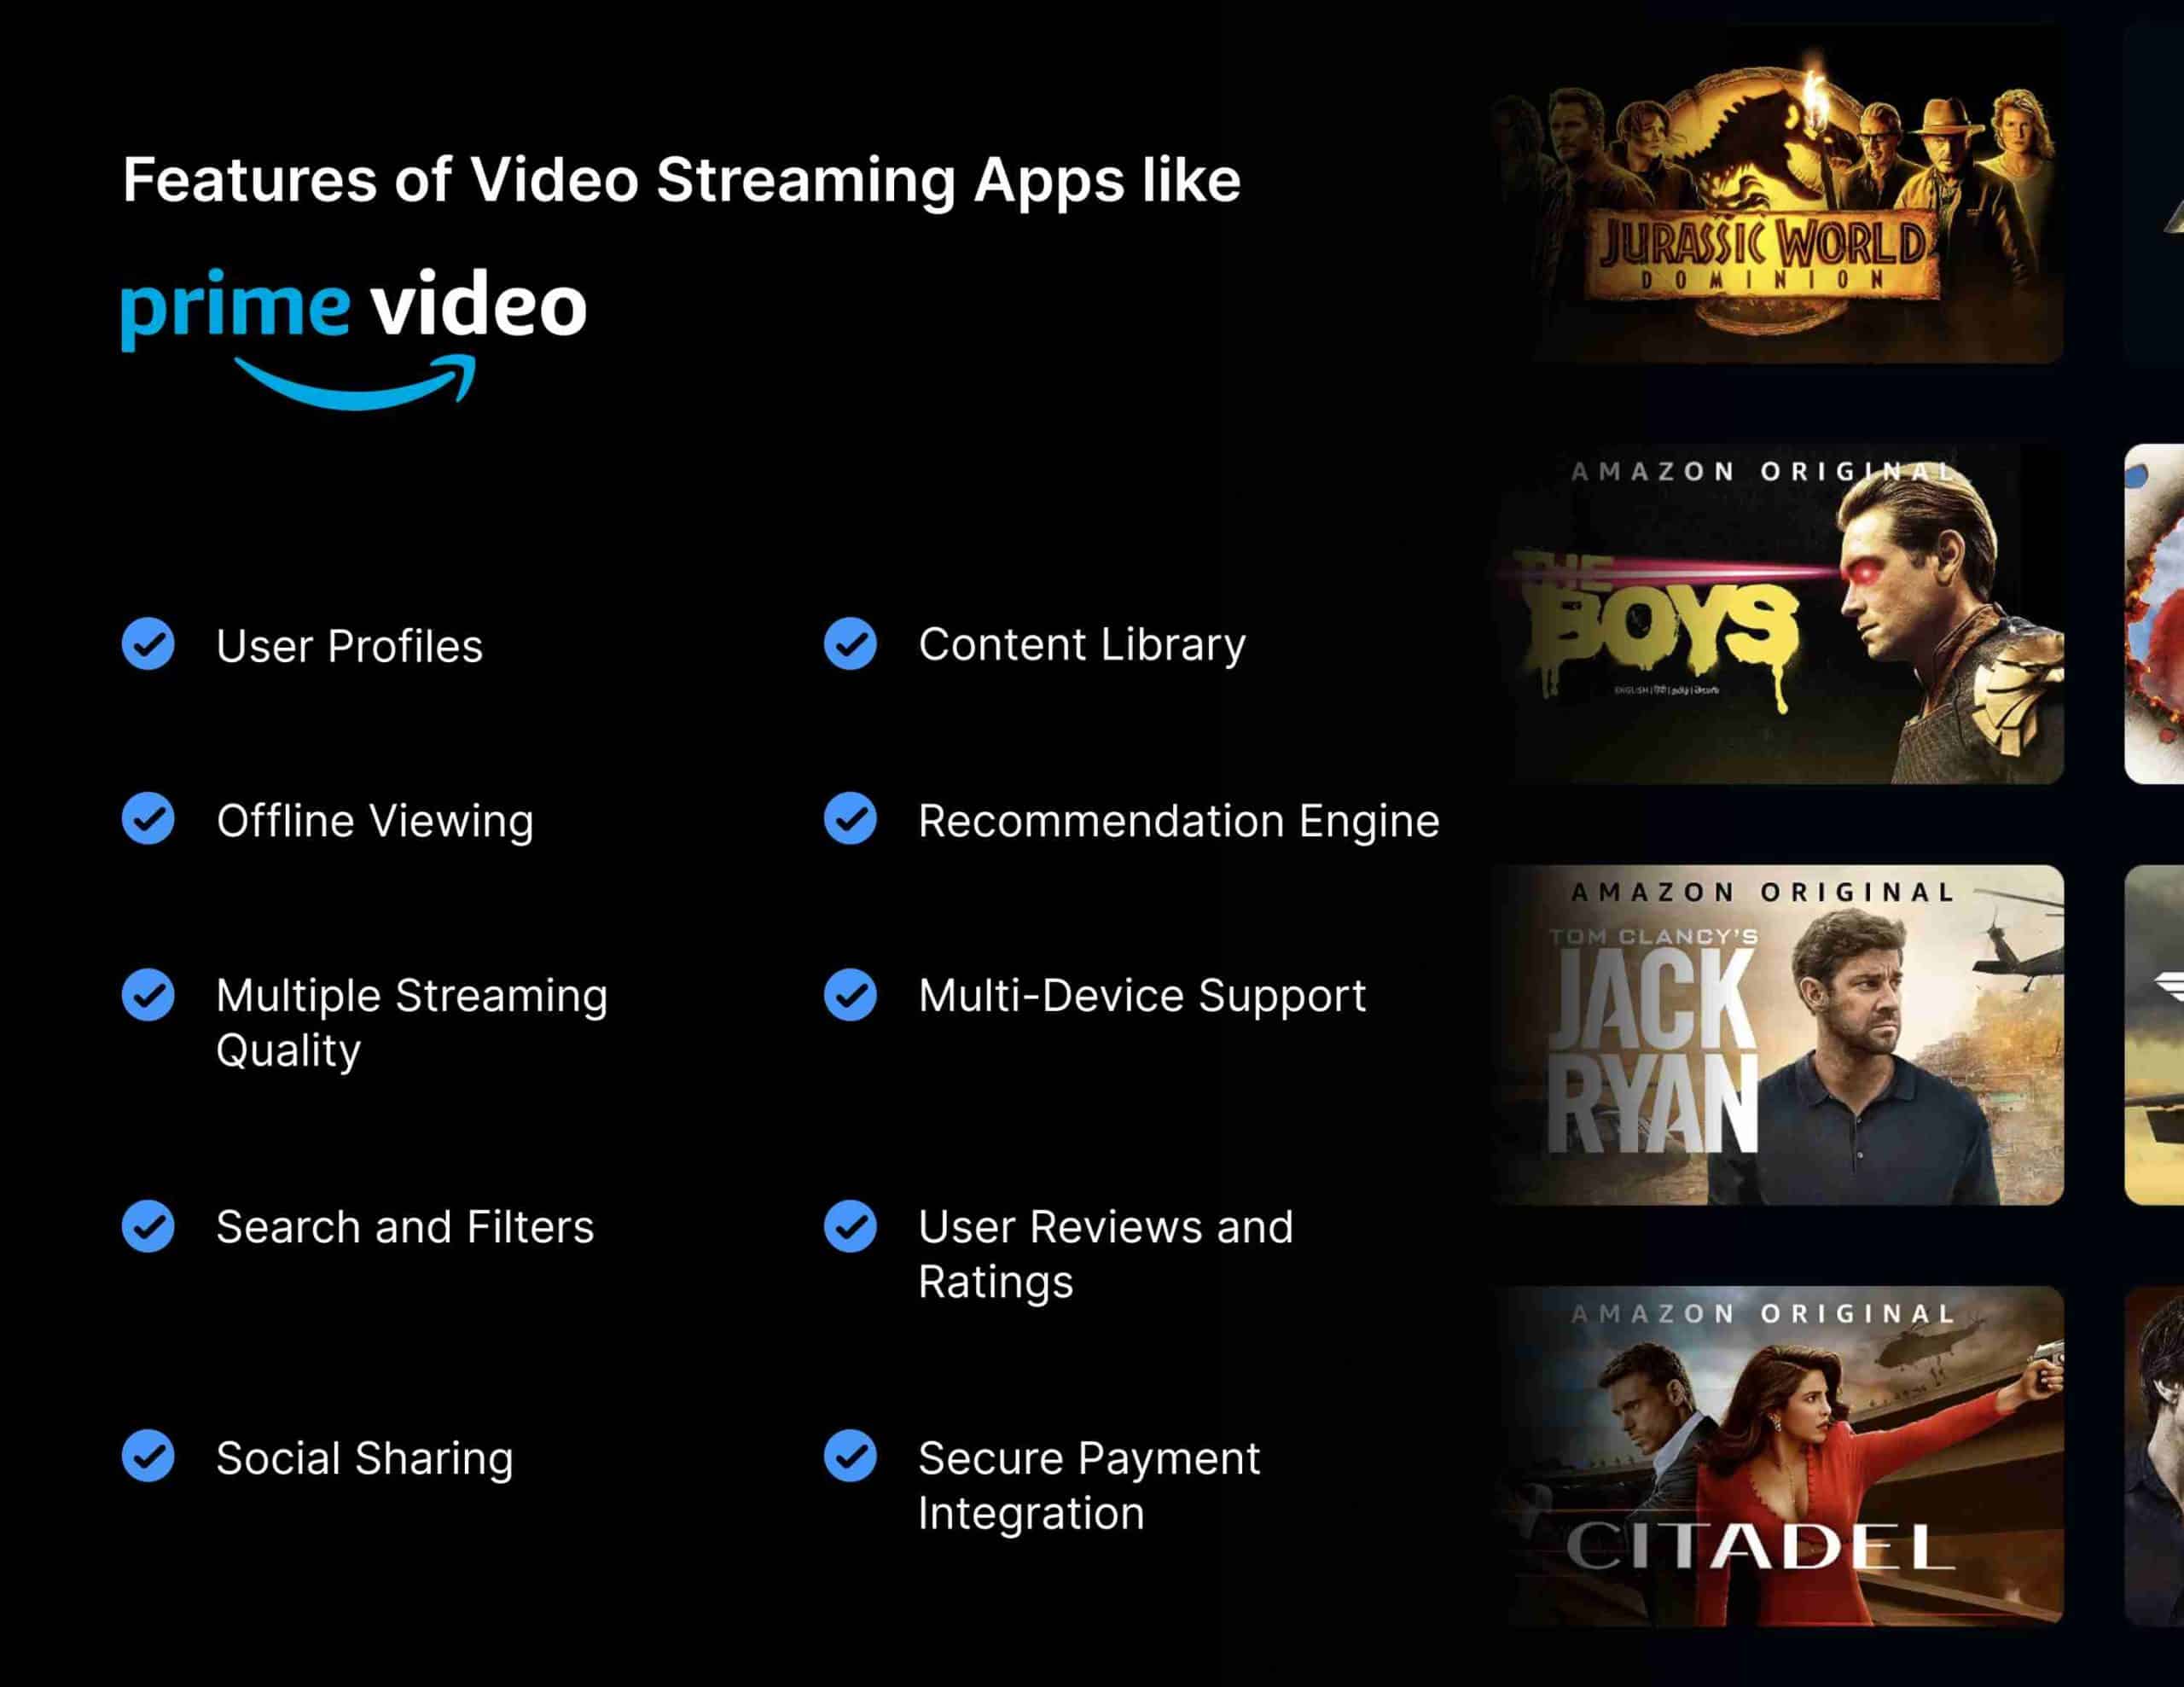 Video Streaming App like Amazon Prime